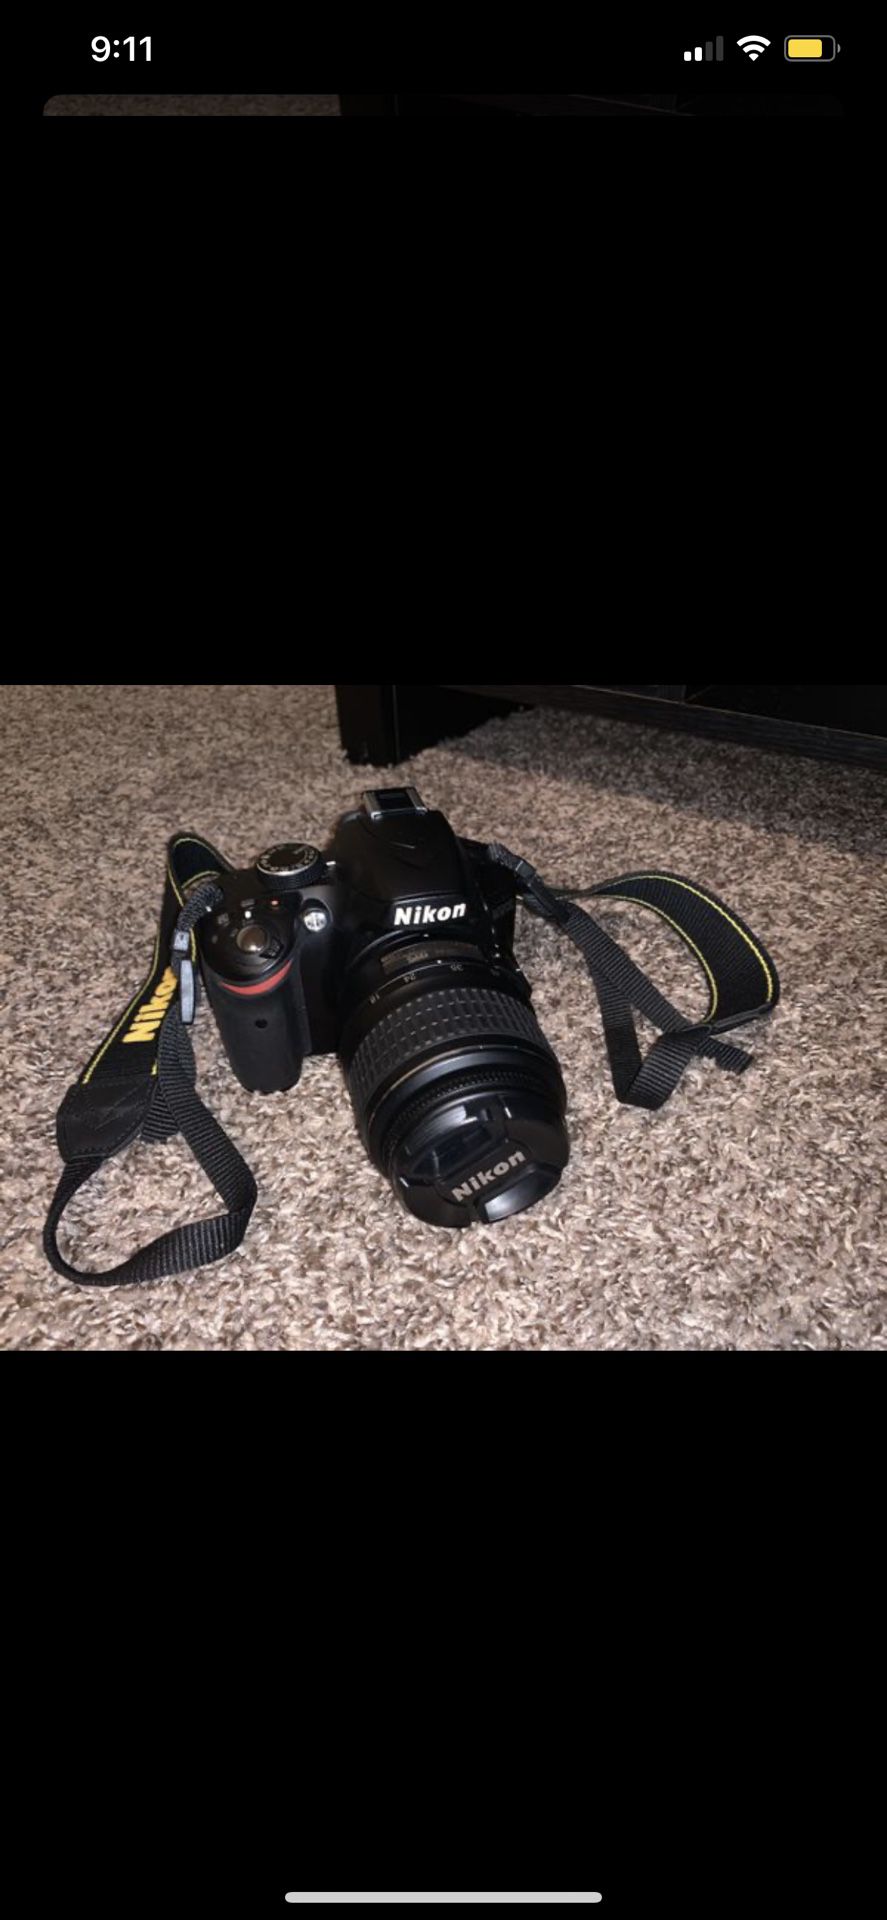 Nikon d3200 camera bundle